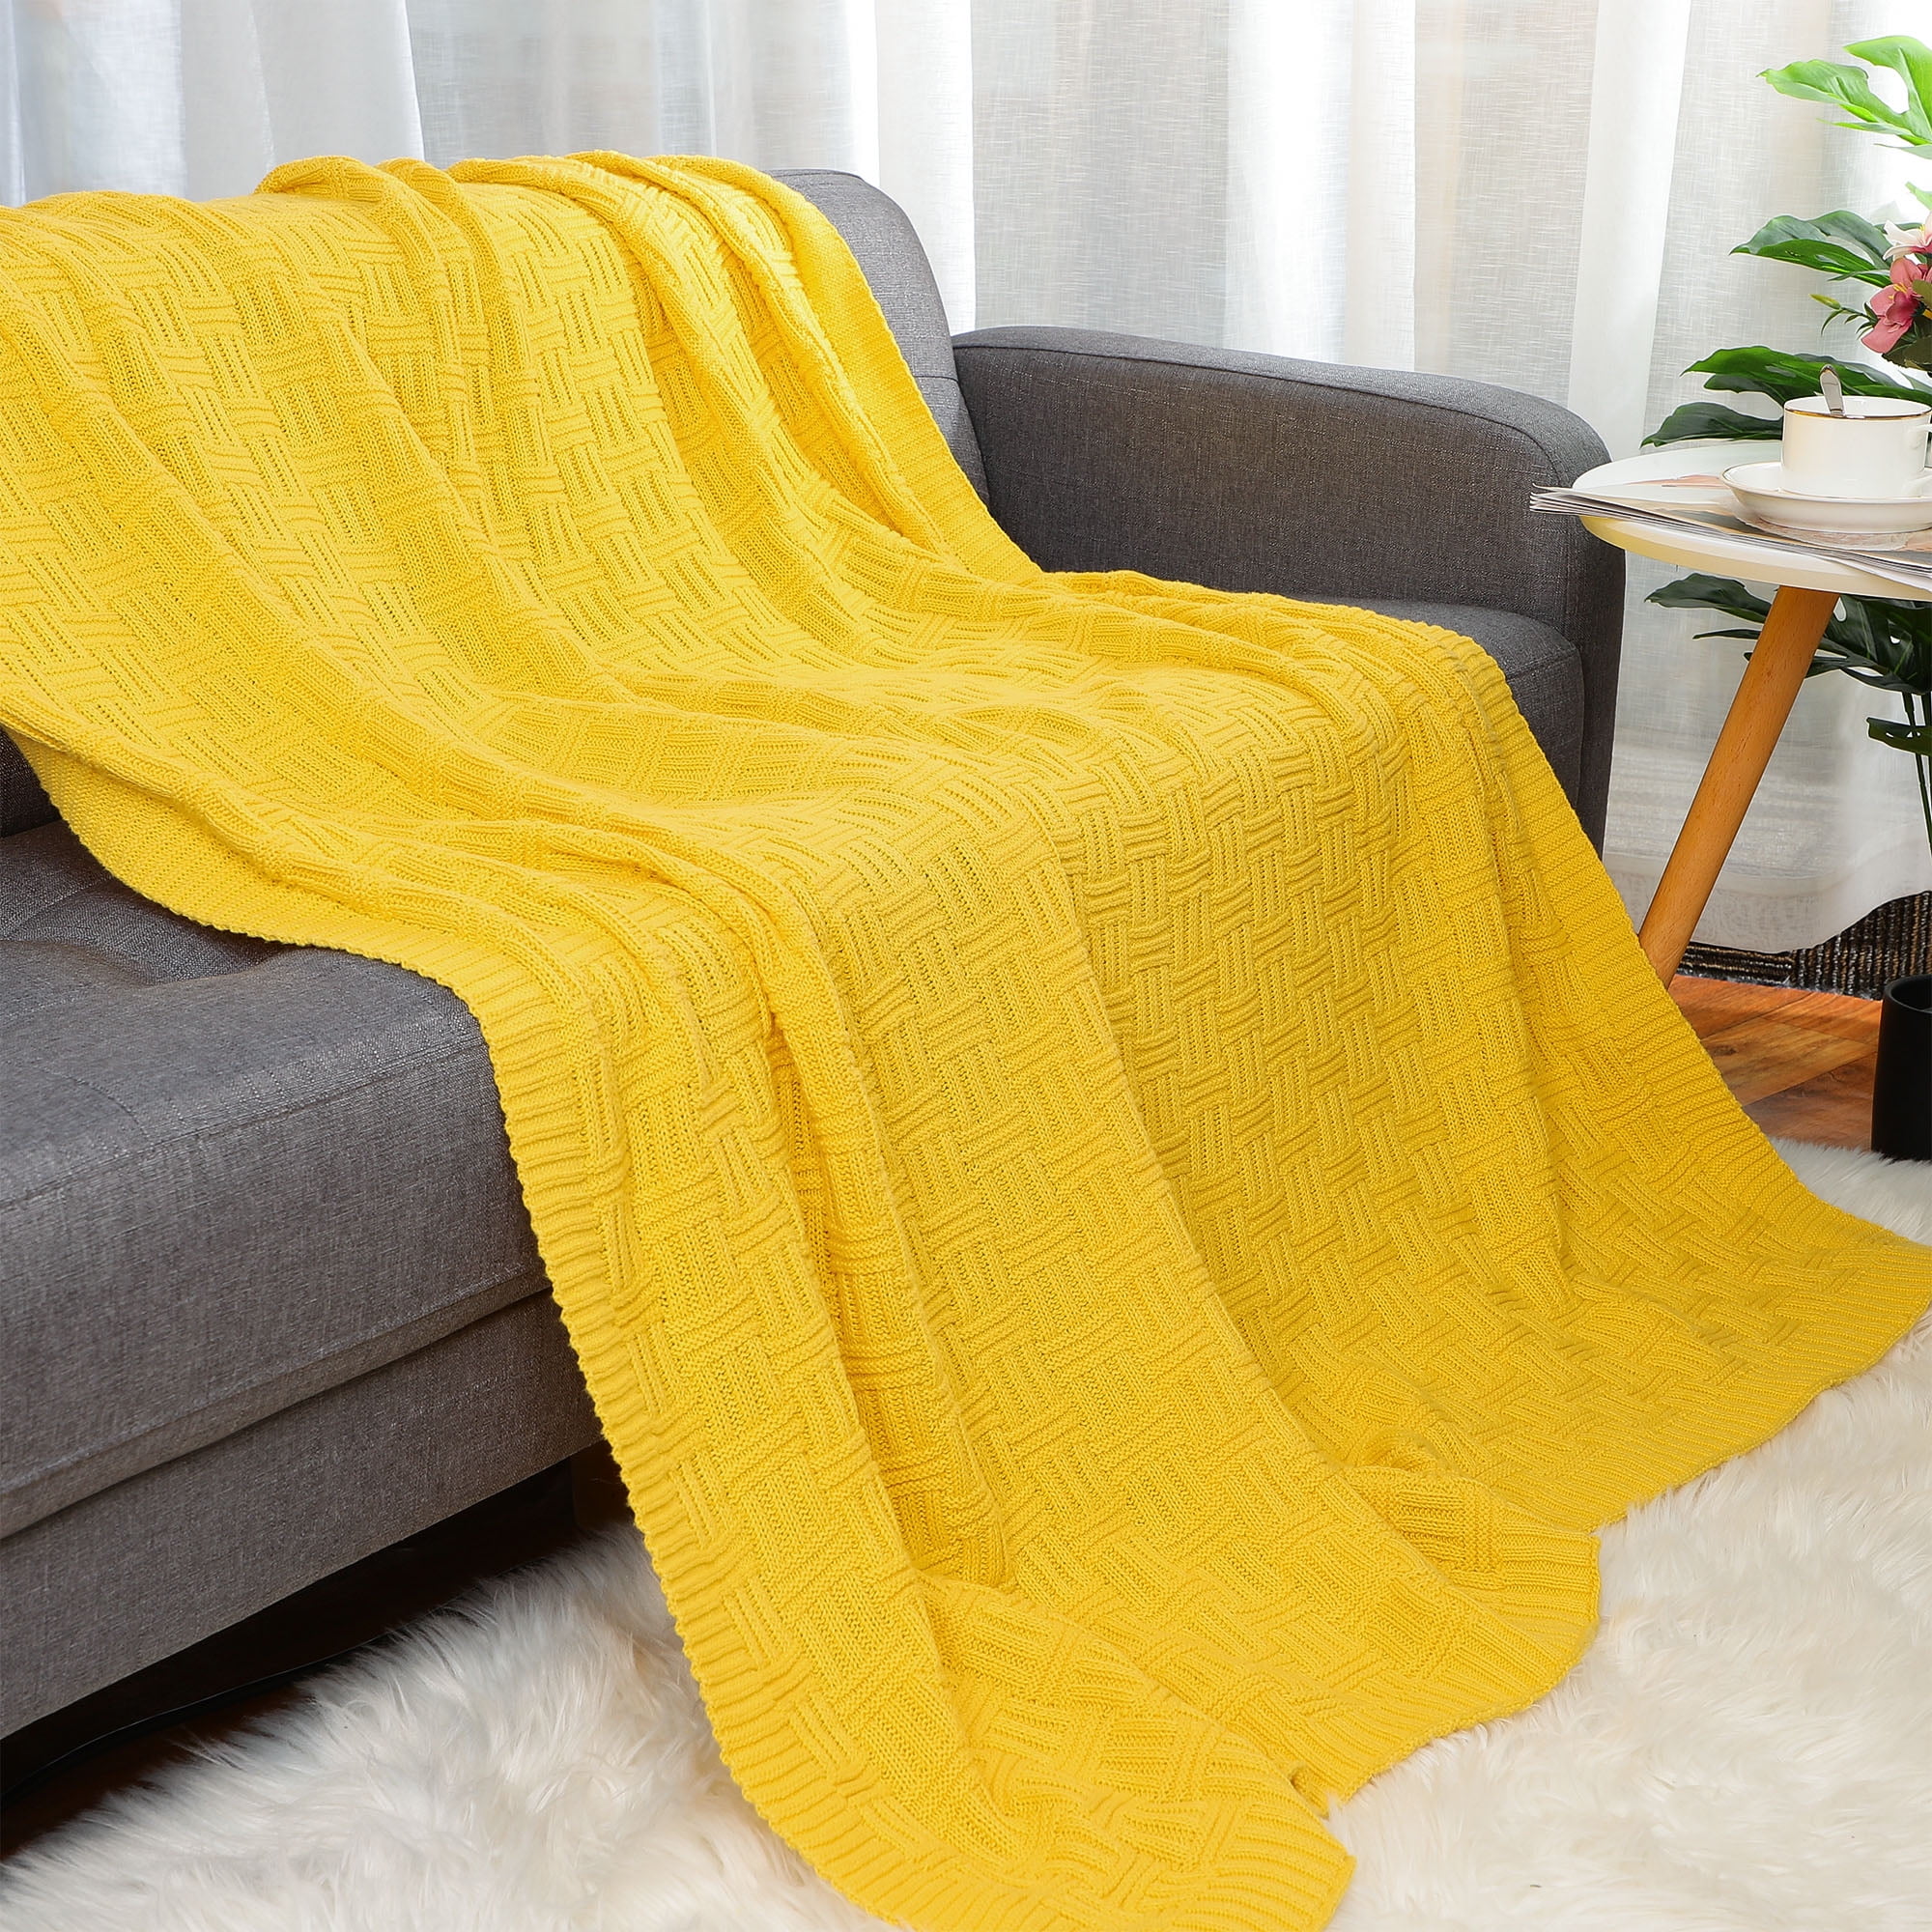 Bed Throw Blanket Mustard Yellow Eco Friendly Cotton Diamond Geometric Sofa 